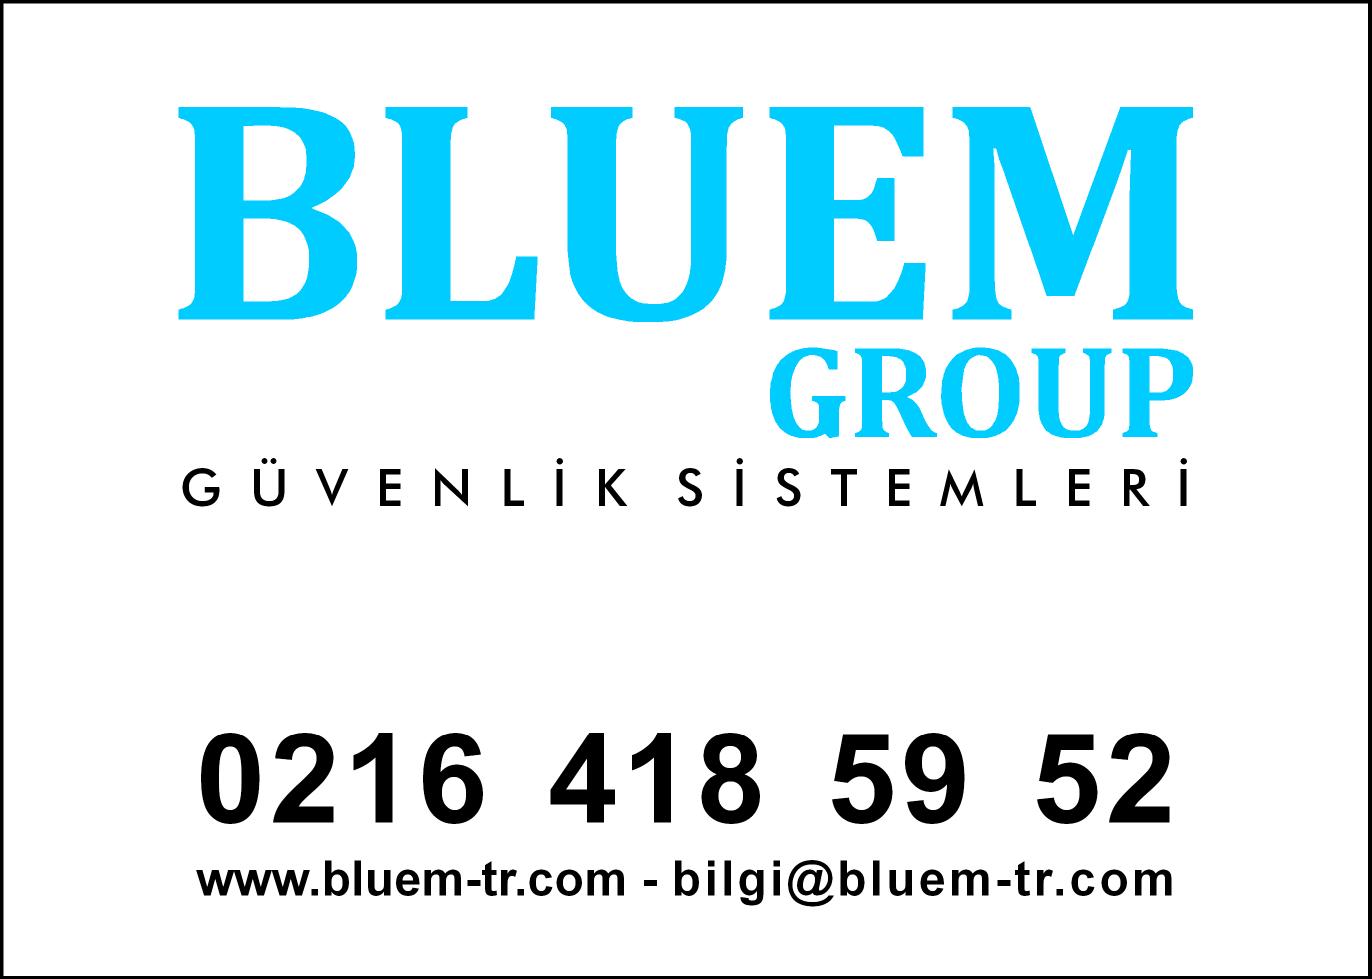 Bluem Group